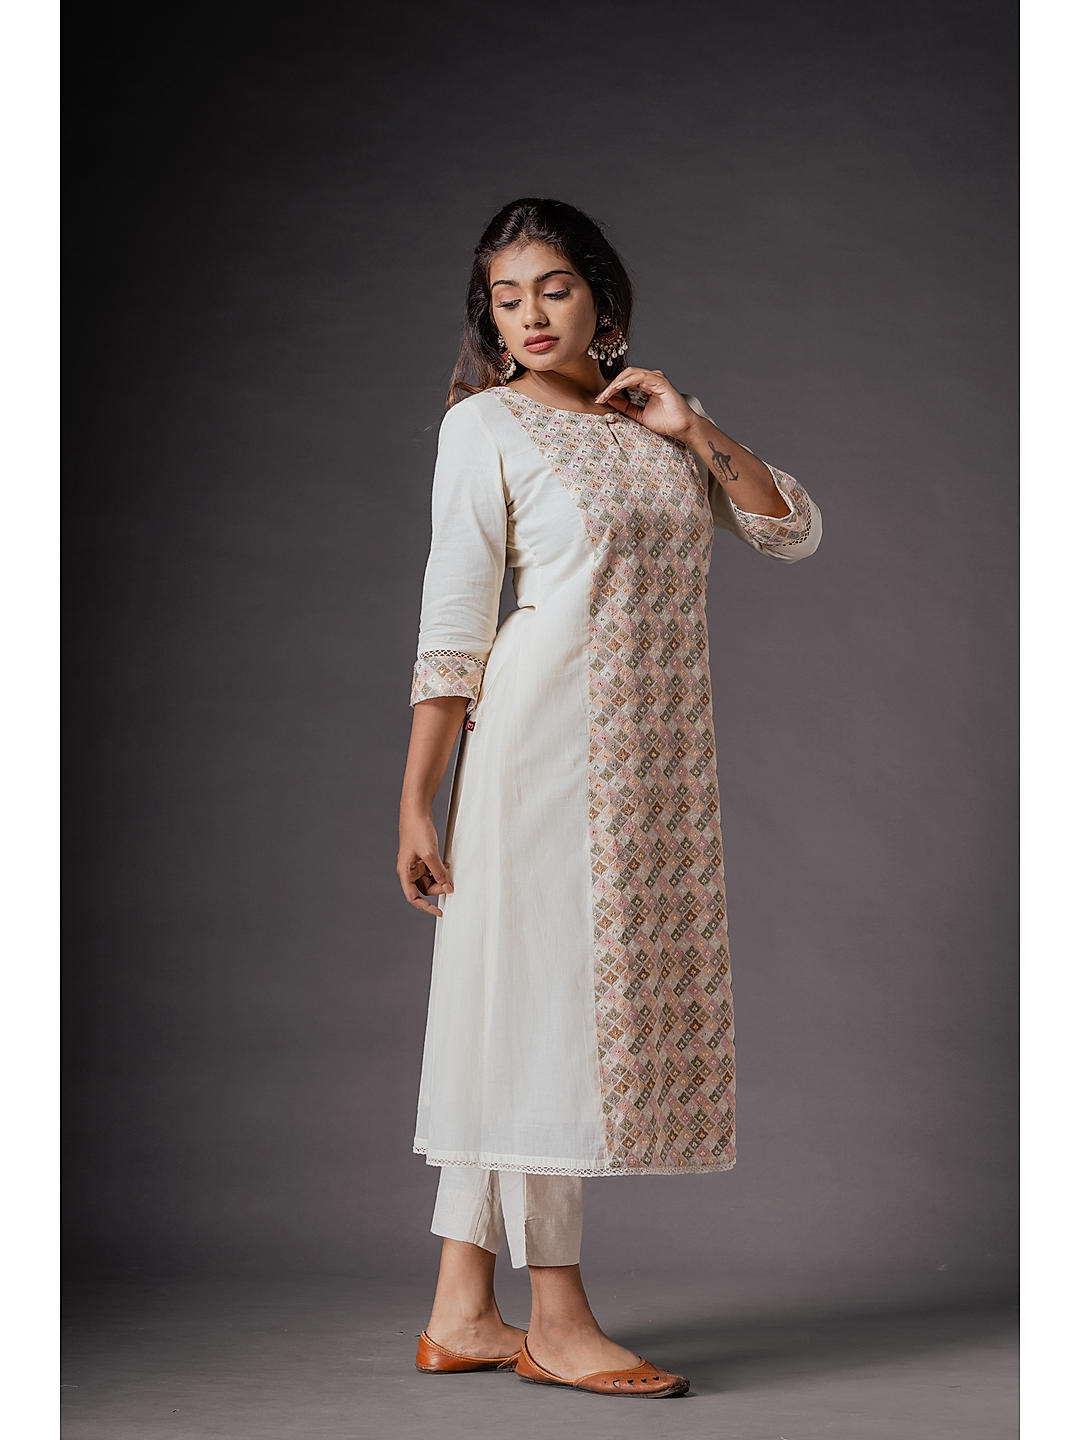 Buy Women's Cotton Long Camisole for Kurti, White Color Women Inner Wear,  Long Full Length Slips for Sheer Dresses, (Pack of 2) (S) at Amazon.in